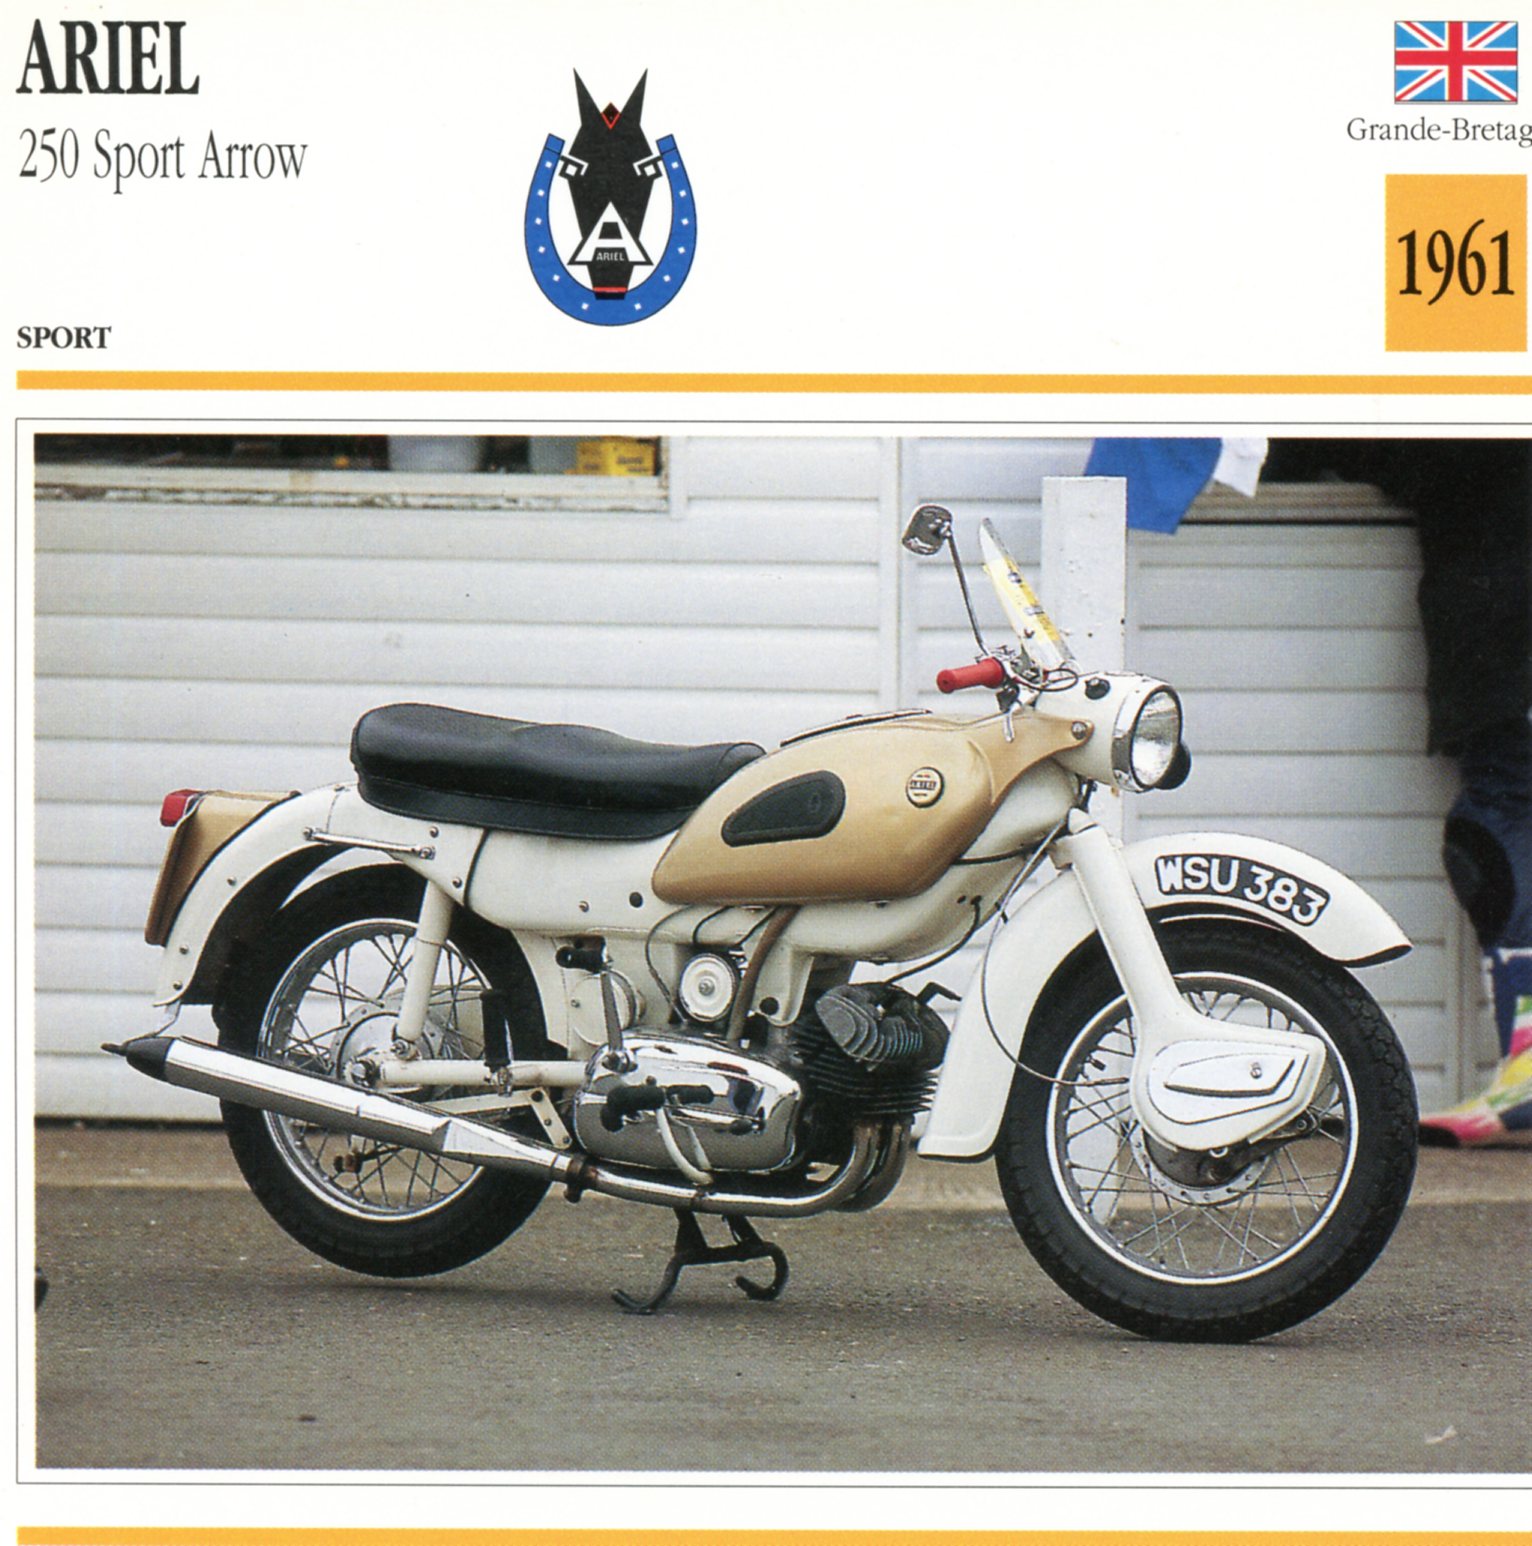 ARIEL 250 SPORT ARROW 1961 -CARTE-CARD-FICHE-MOTO-LEMASTERBROCKERS